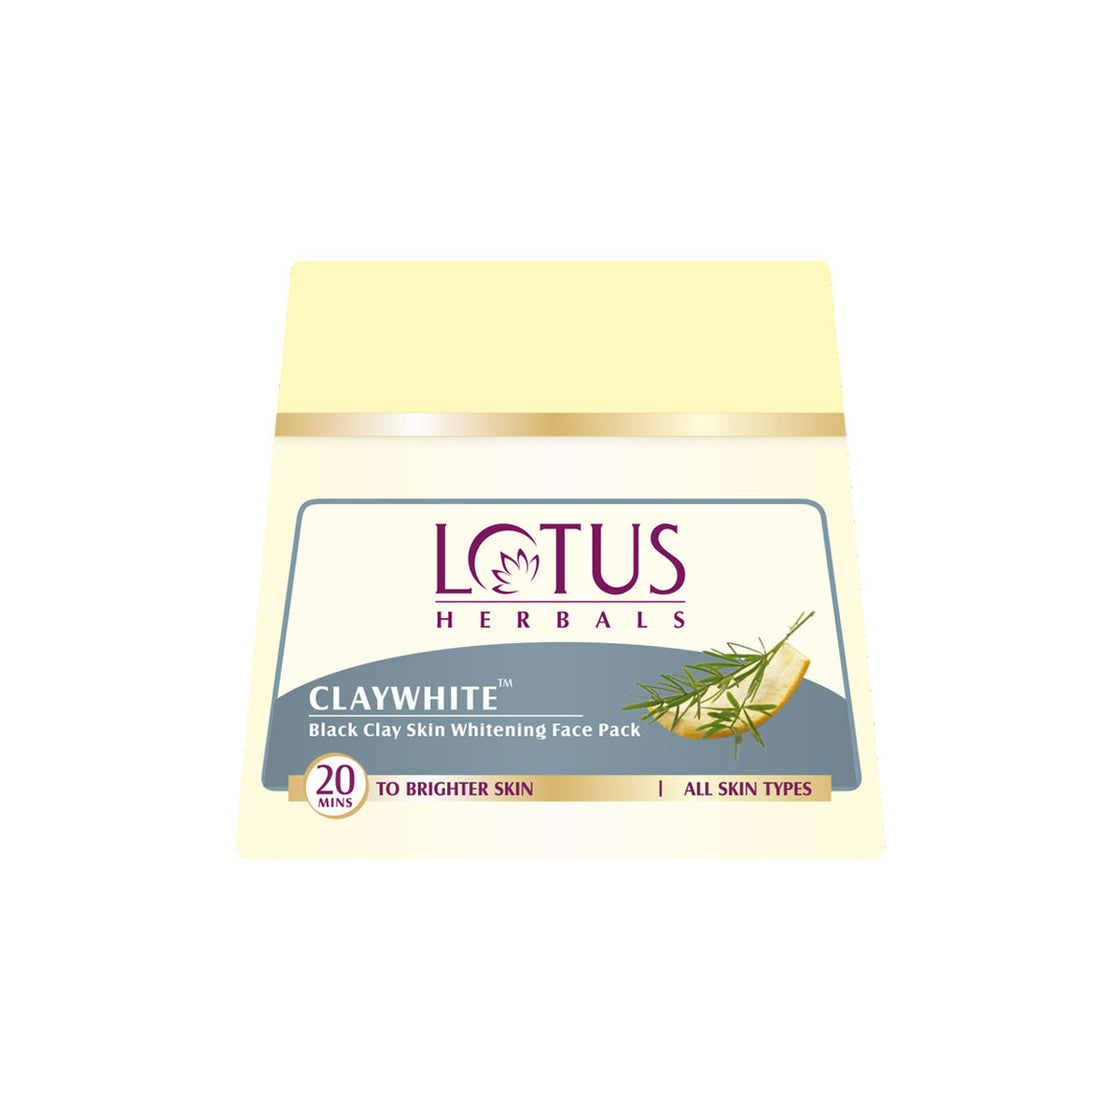 Lotus Herbals Claywhite Black Clay Skin Whitening Face Pack (350g)